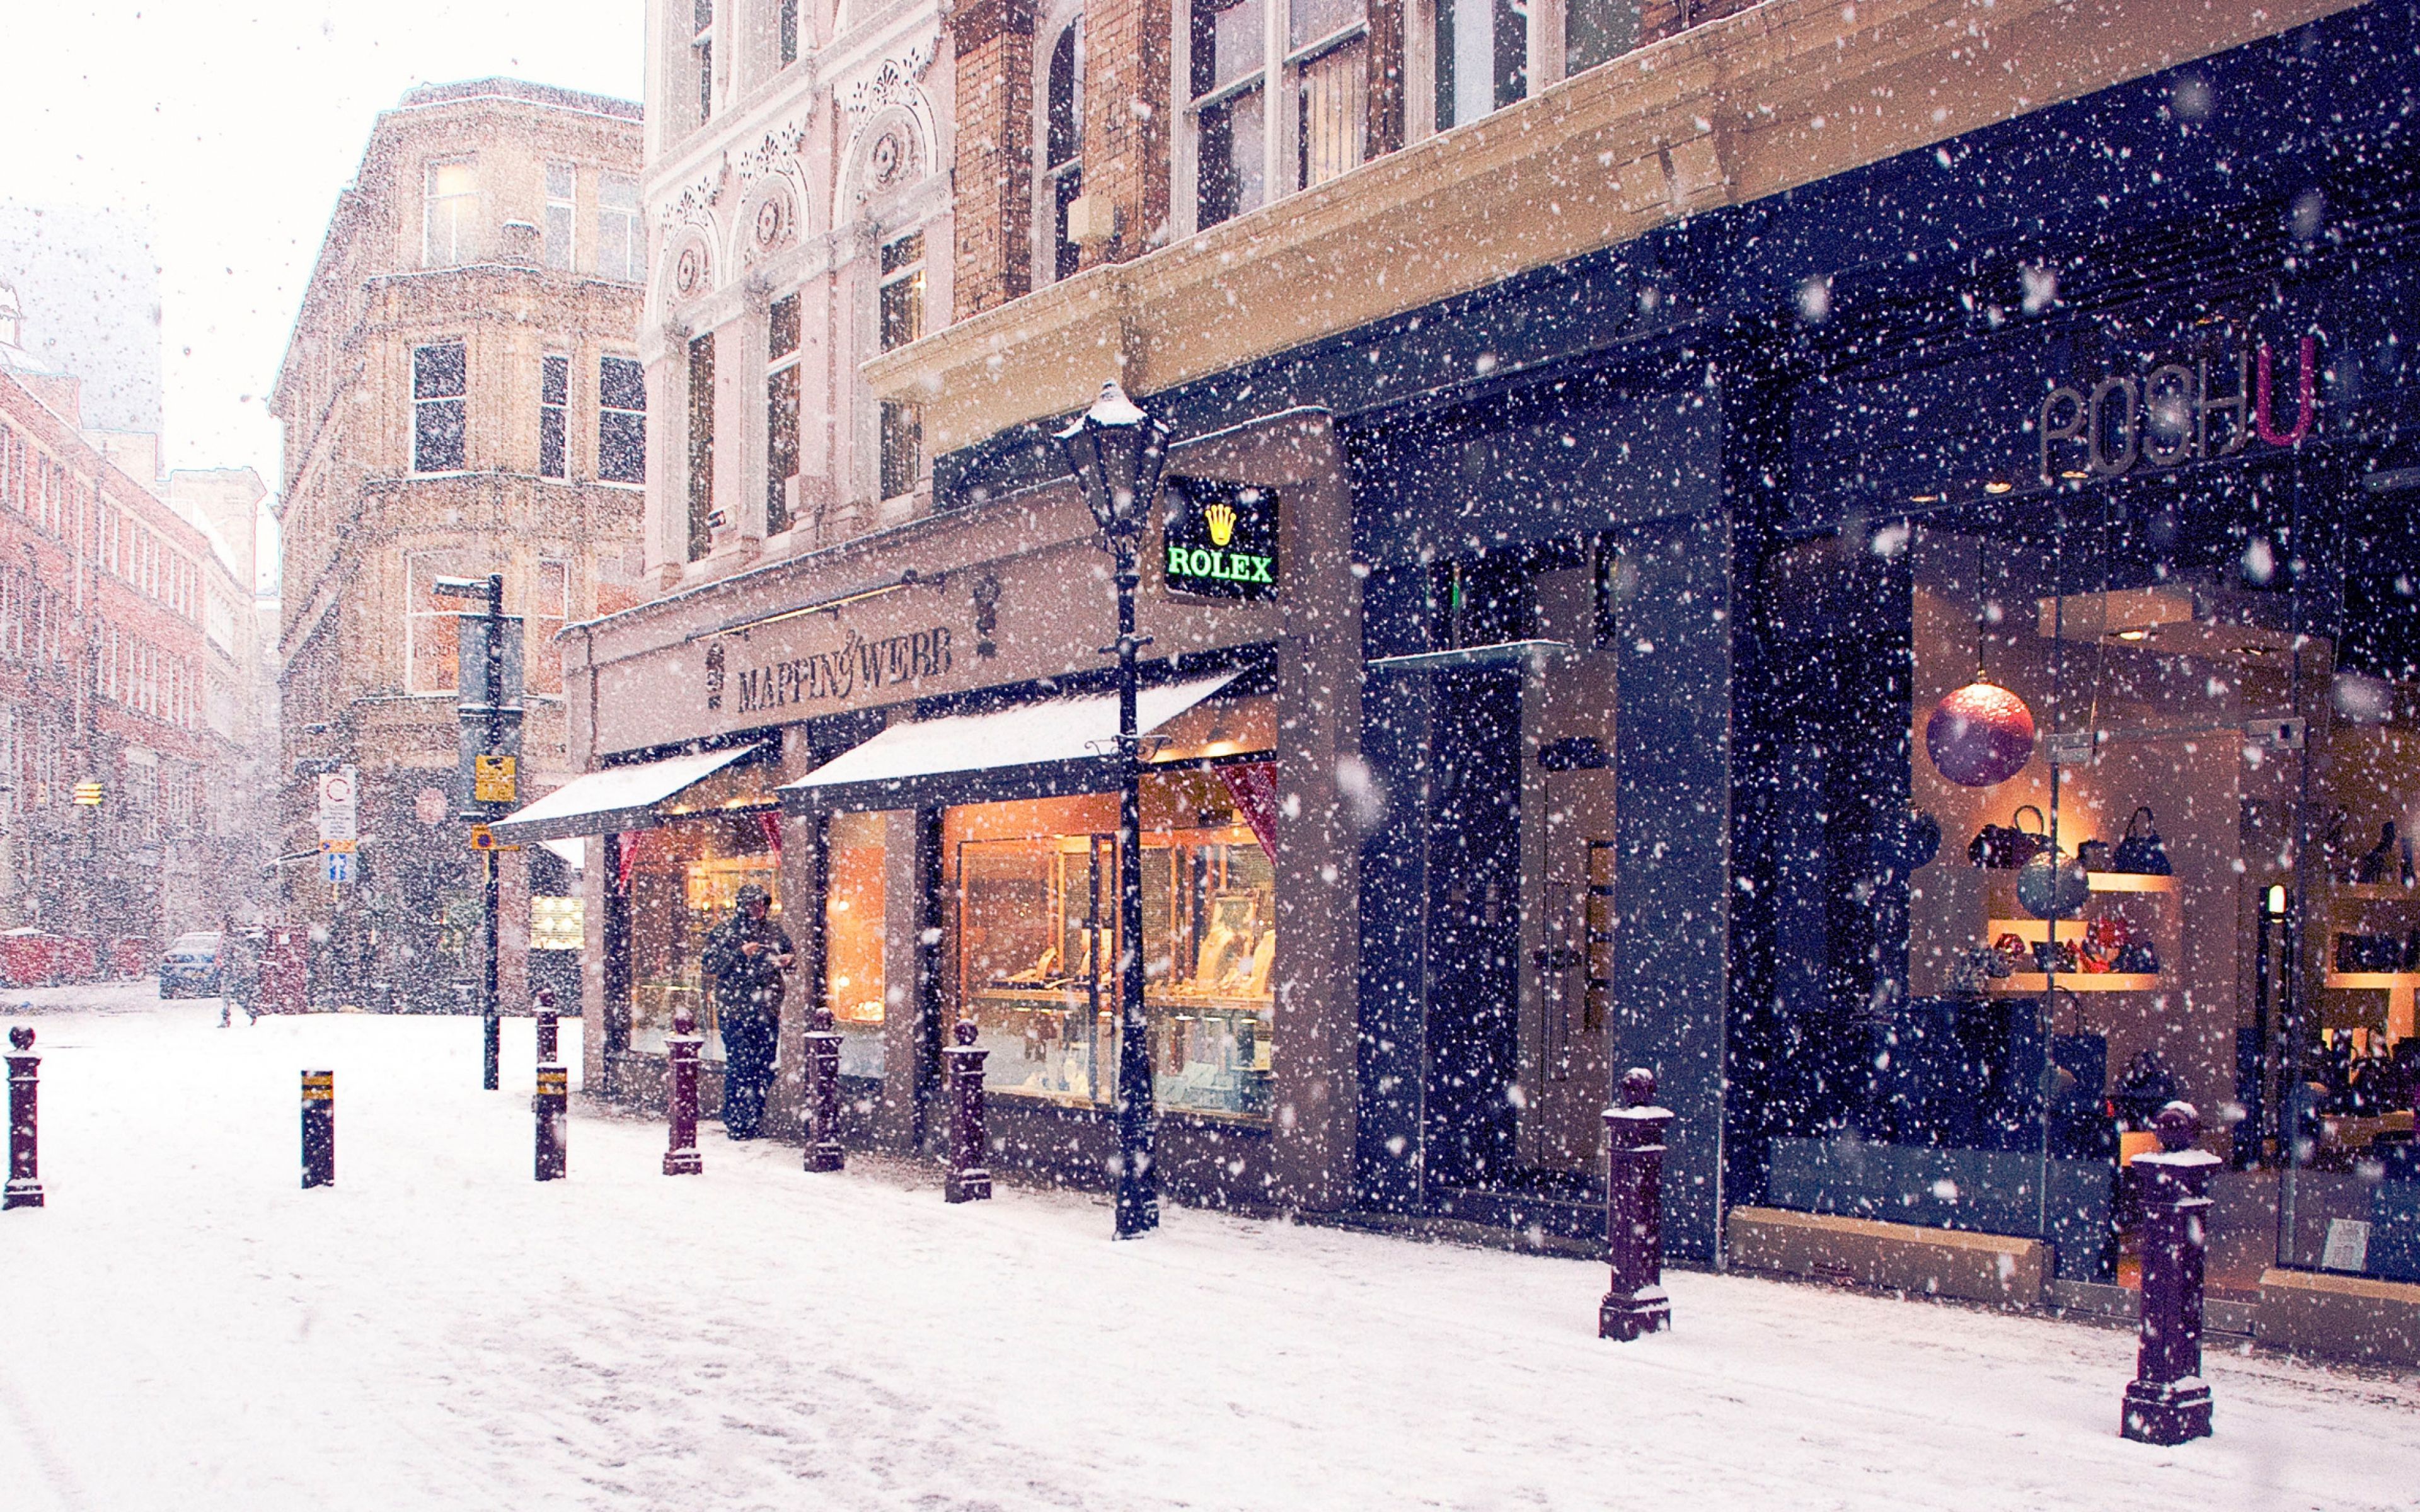 Wallpaper city, winter, europe, street, snow, shopping. Kentsel dönüşüm, Kış, Fotoğrafçılık